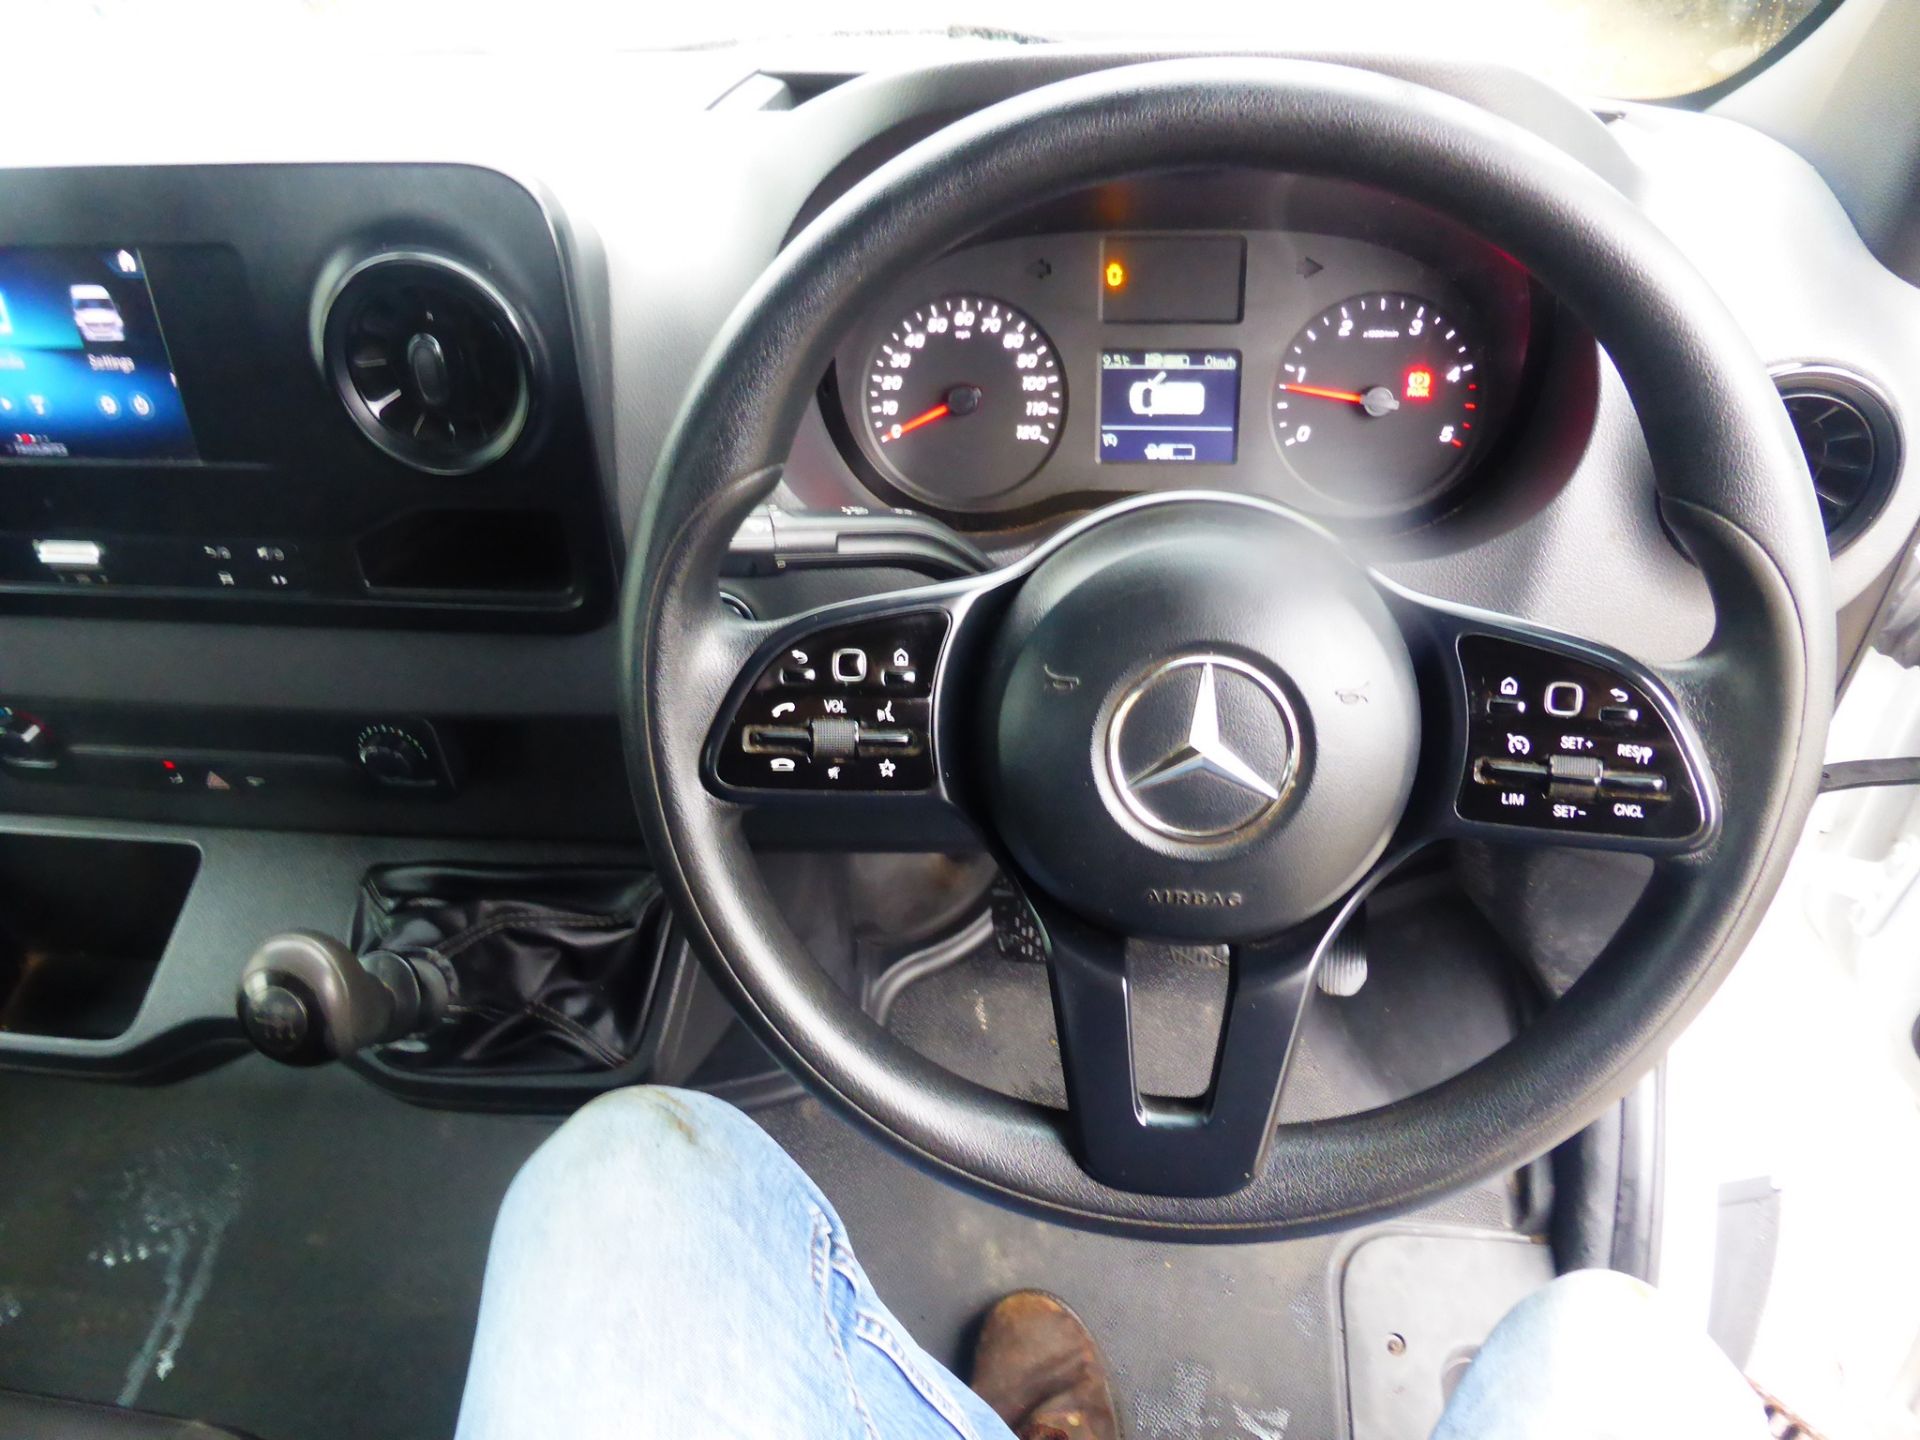 Mercedes-Benz Sprinter - 314DCI 11ft Alloy Dropside - Image 7 of 11